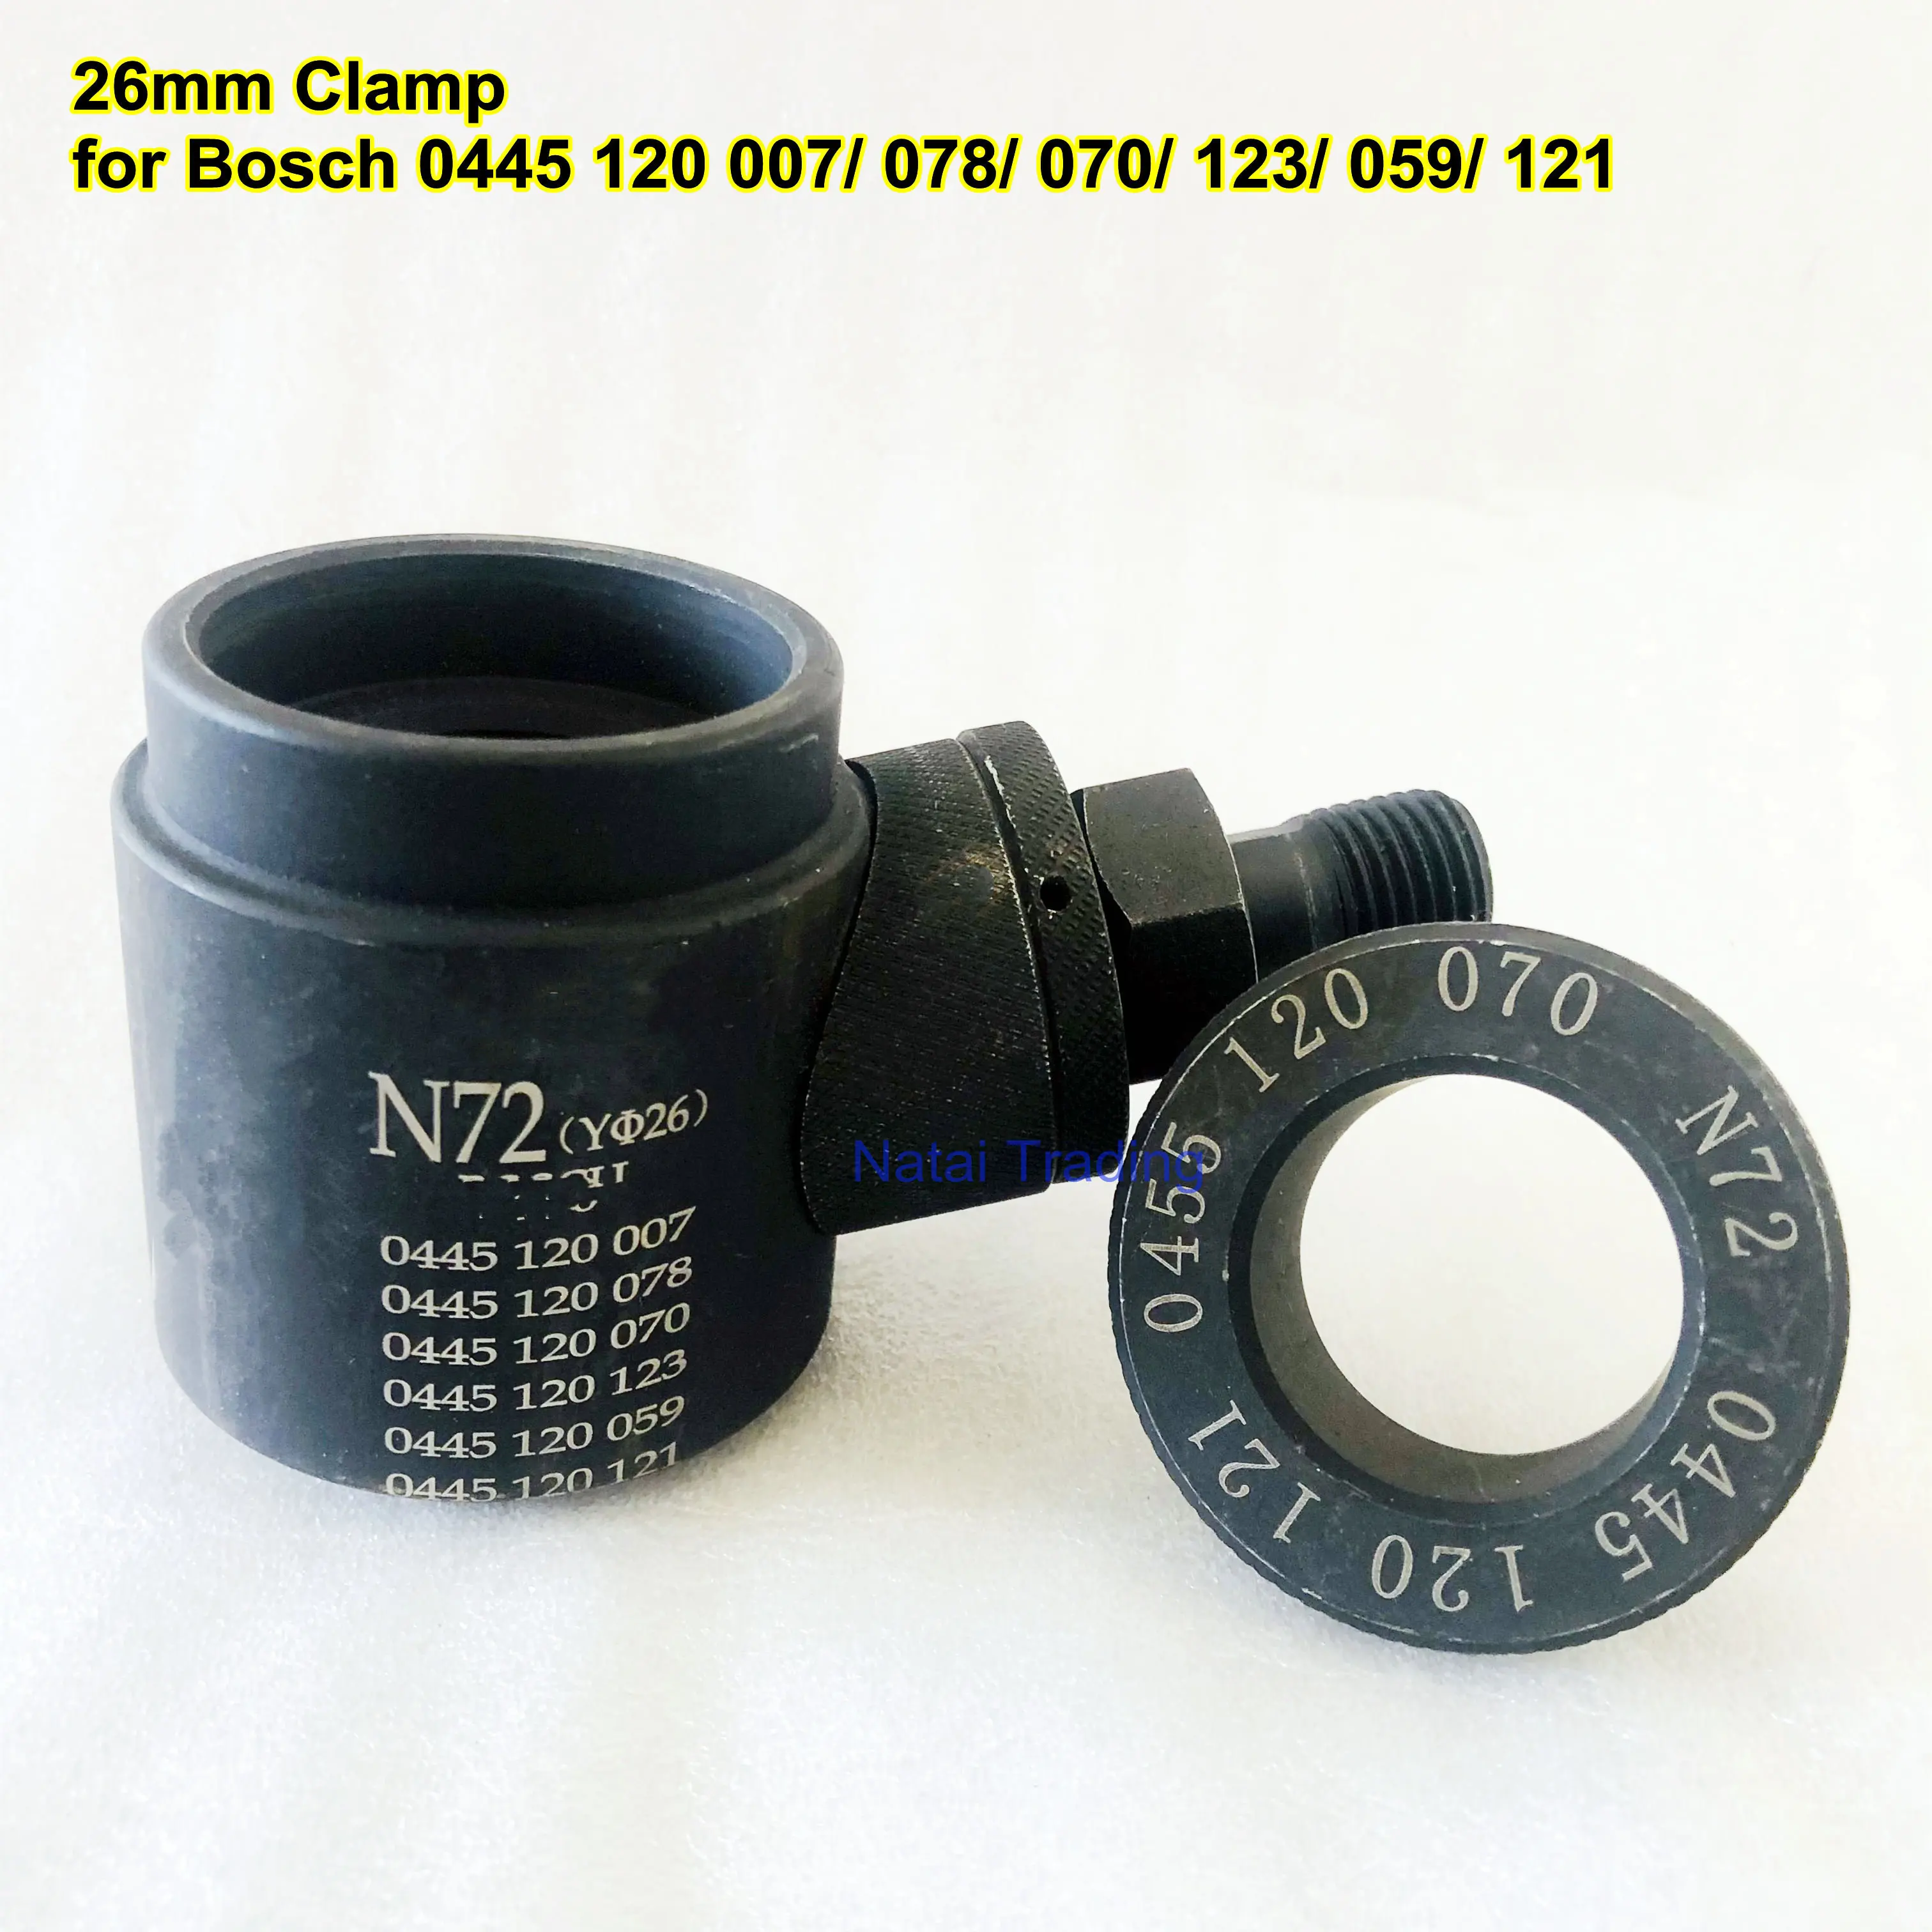 Diesel Injector Clamp N72 for Bosch 0445120059 007 123 078 070 Common Rail Injector 26mm Adaptor Repair Tool